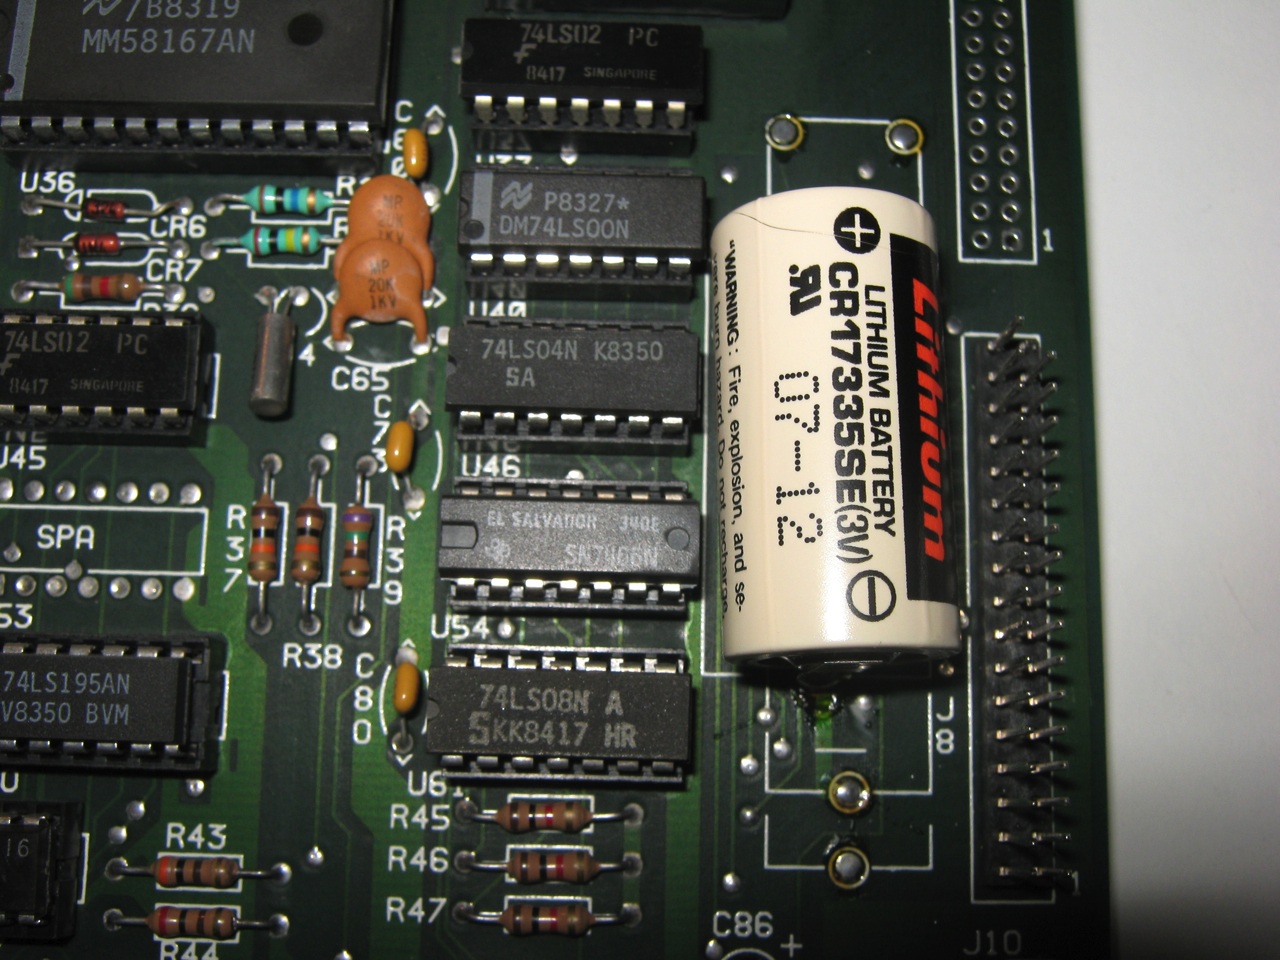  PCB Fix / KayPlus / Battery | nIGHTFALL Blog / RetroComputerMania.com